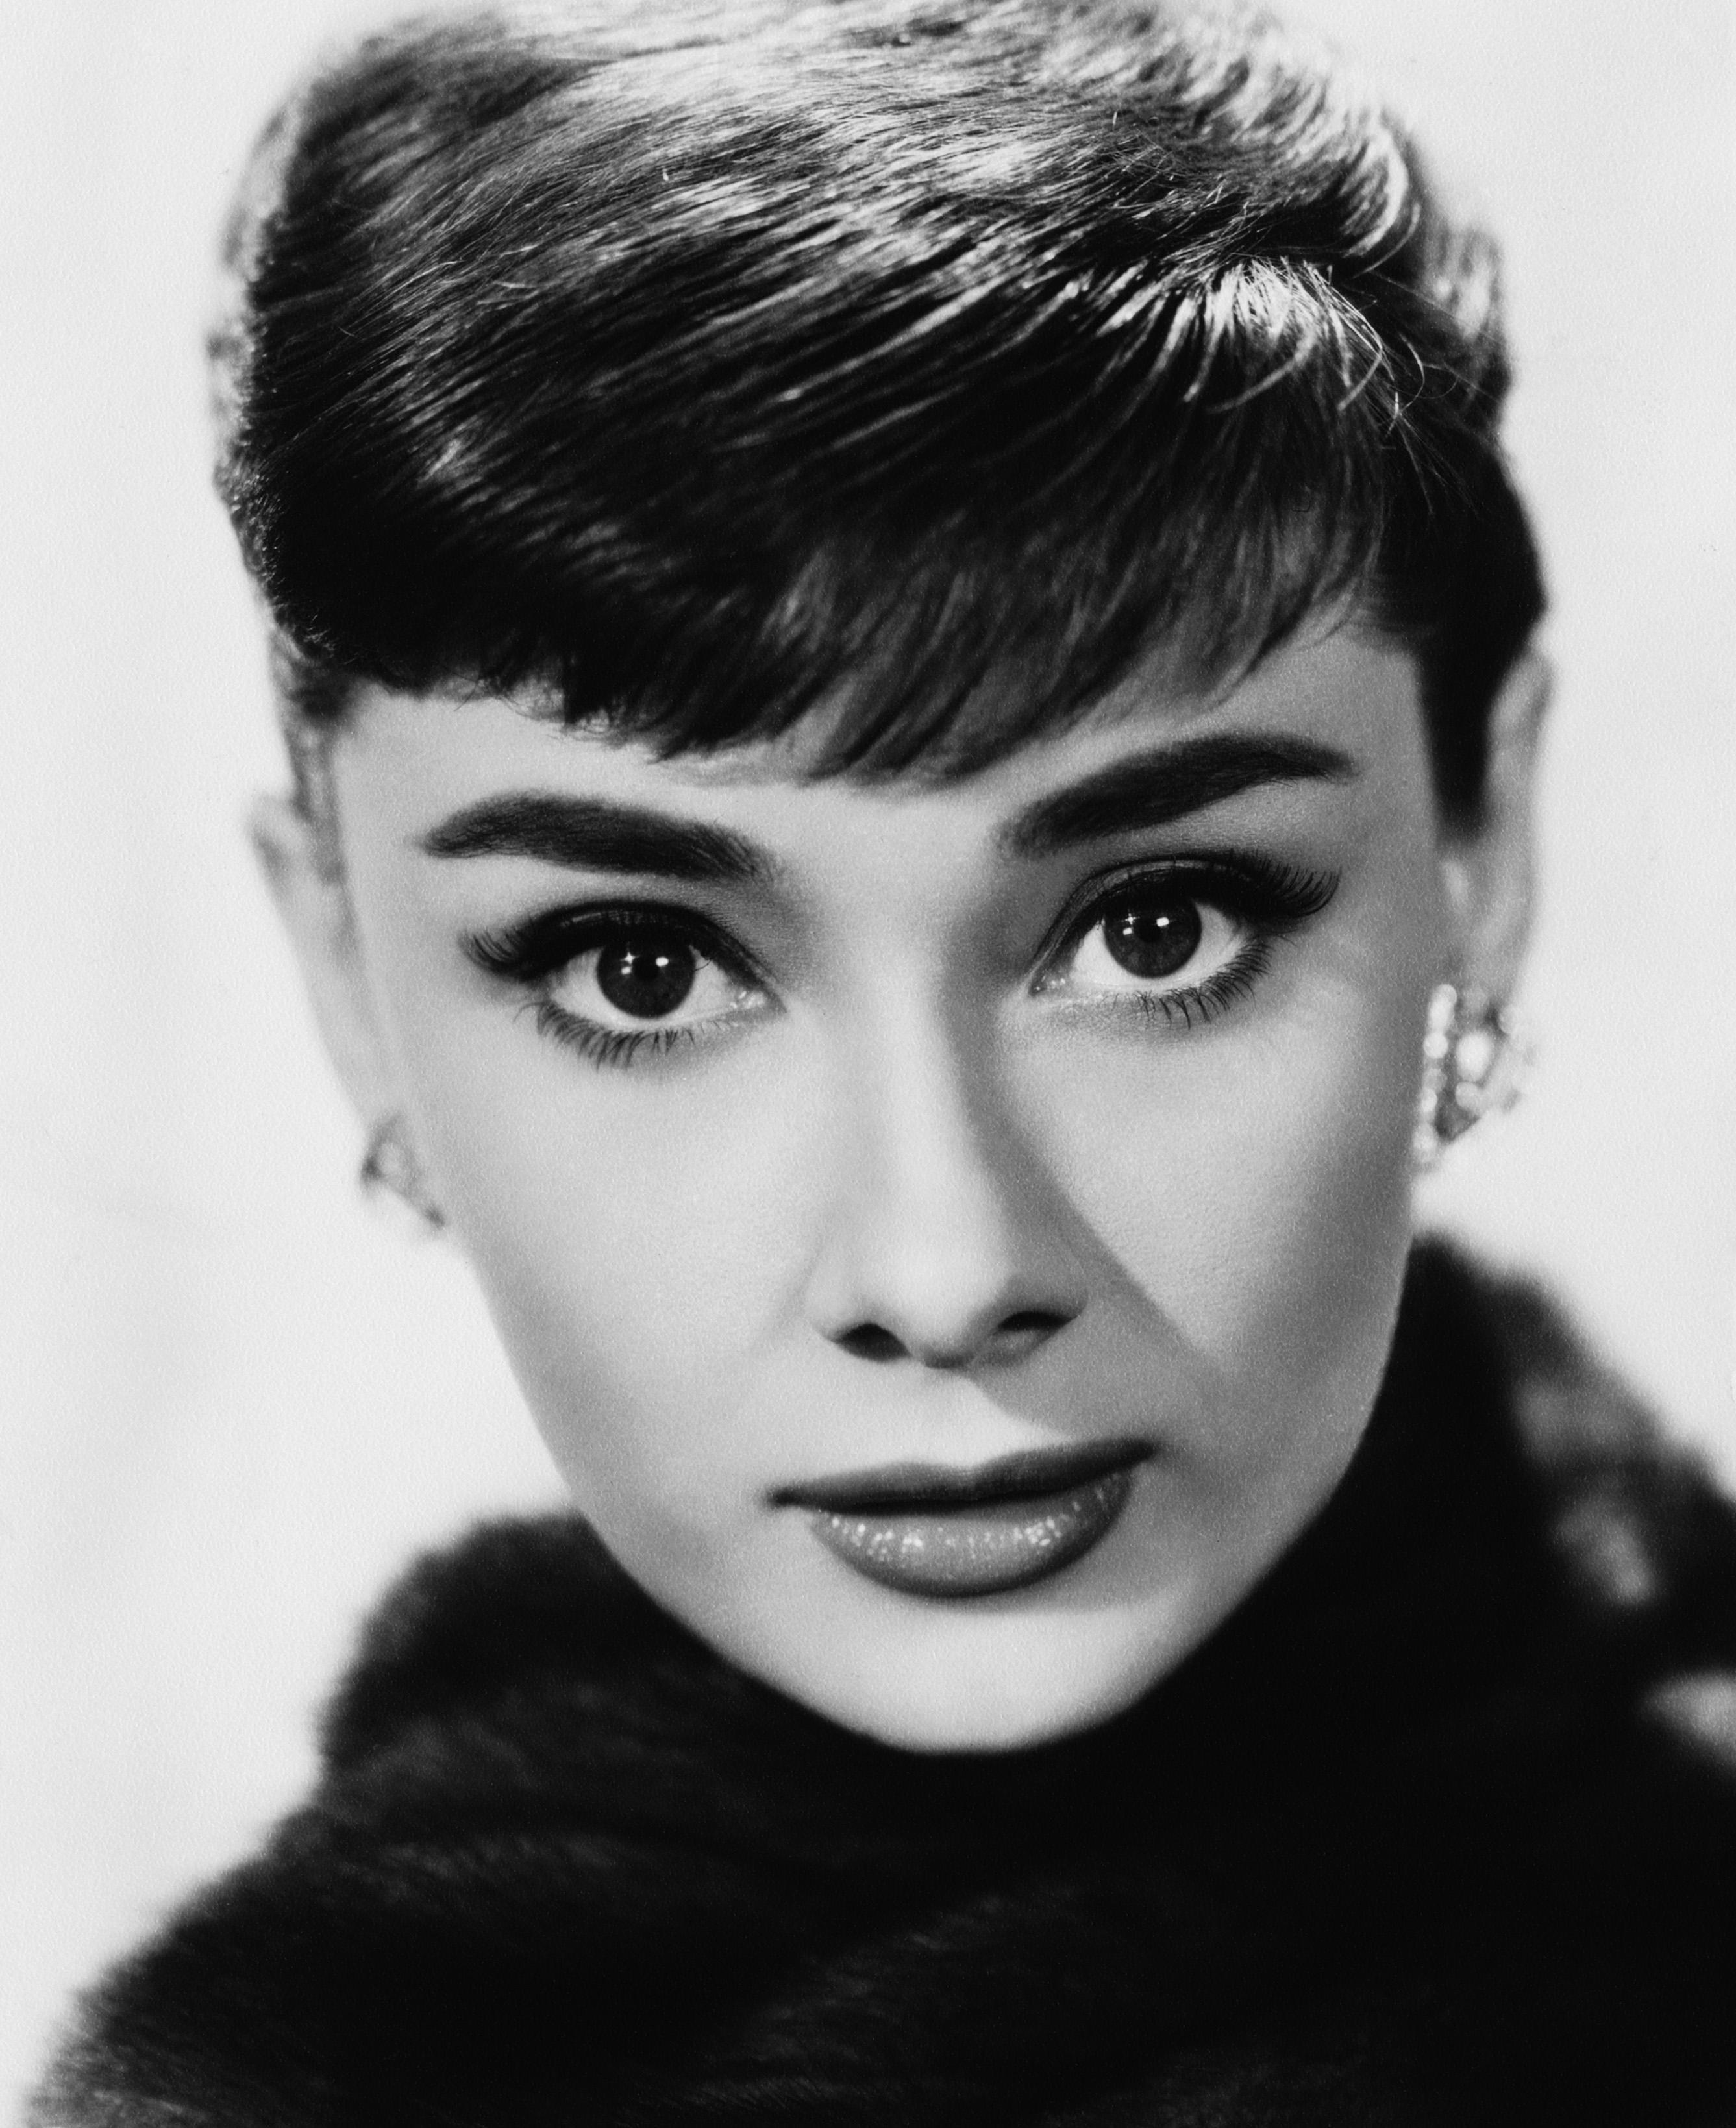 Unknown Black and White Photograph - Audrey Hepburn Glamour Up Close Globe Photos Fine Art Print